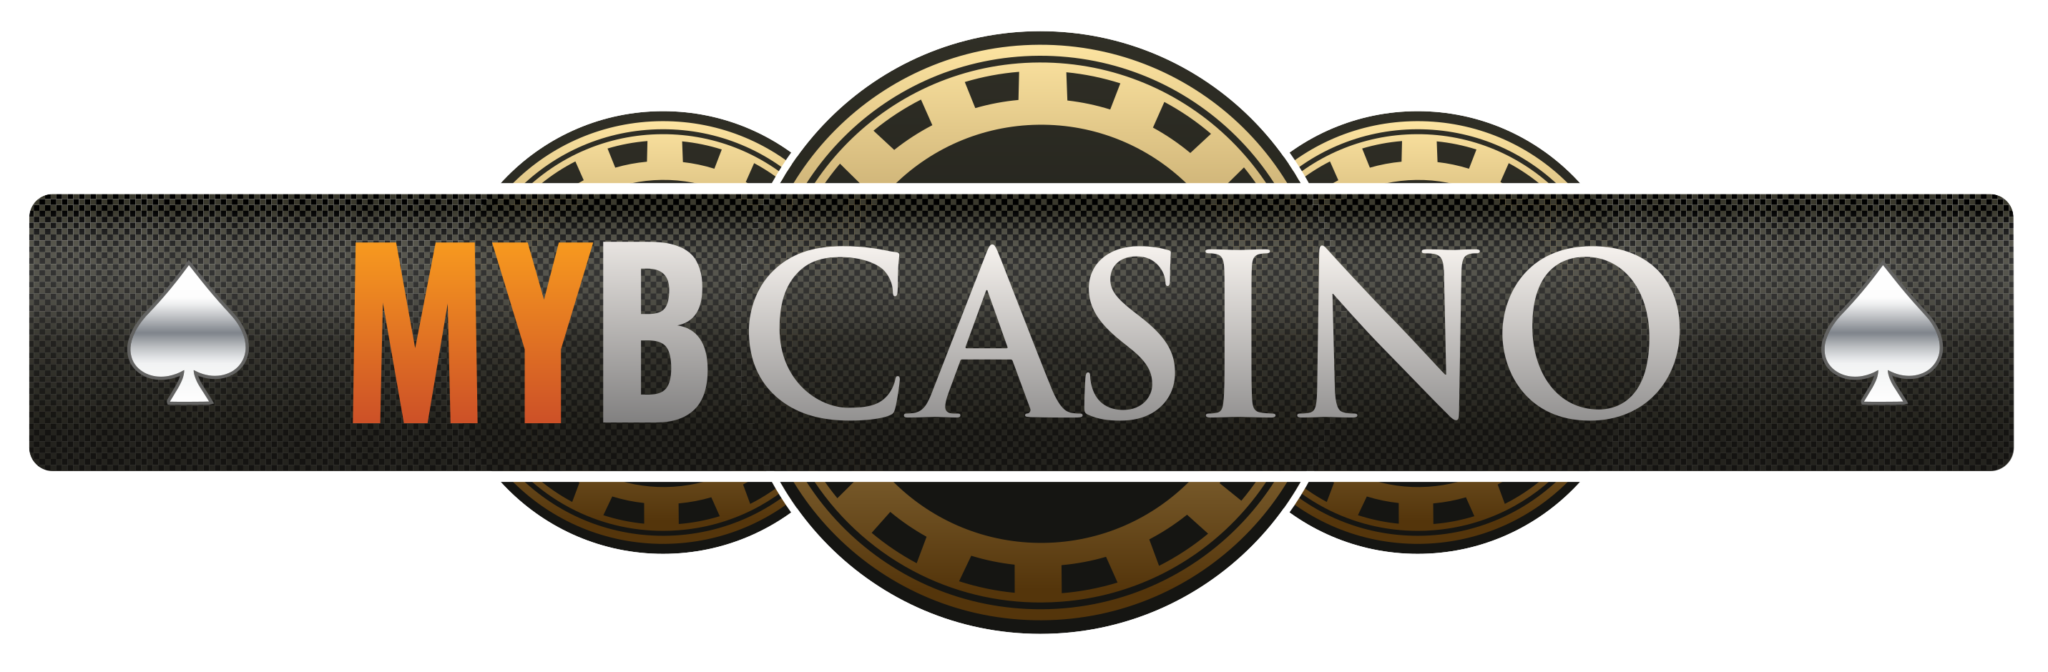 Atlantis Slots Casino Esame critico 1200, 150 FS gratifica